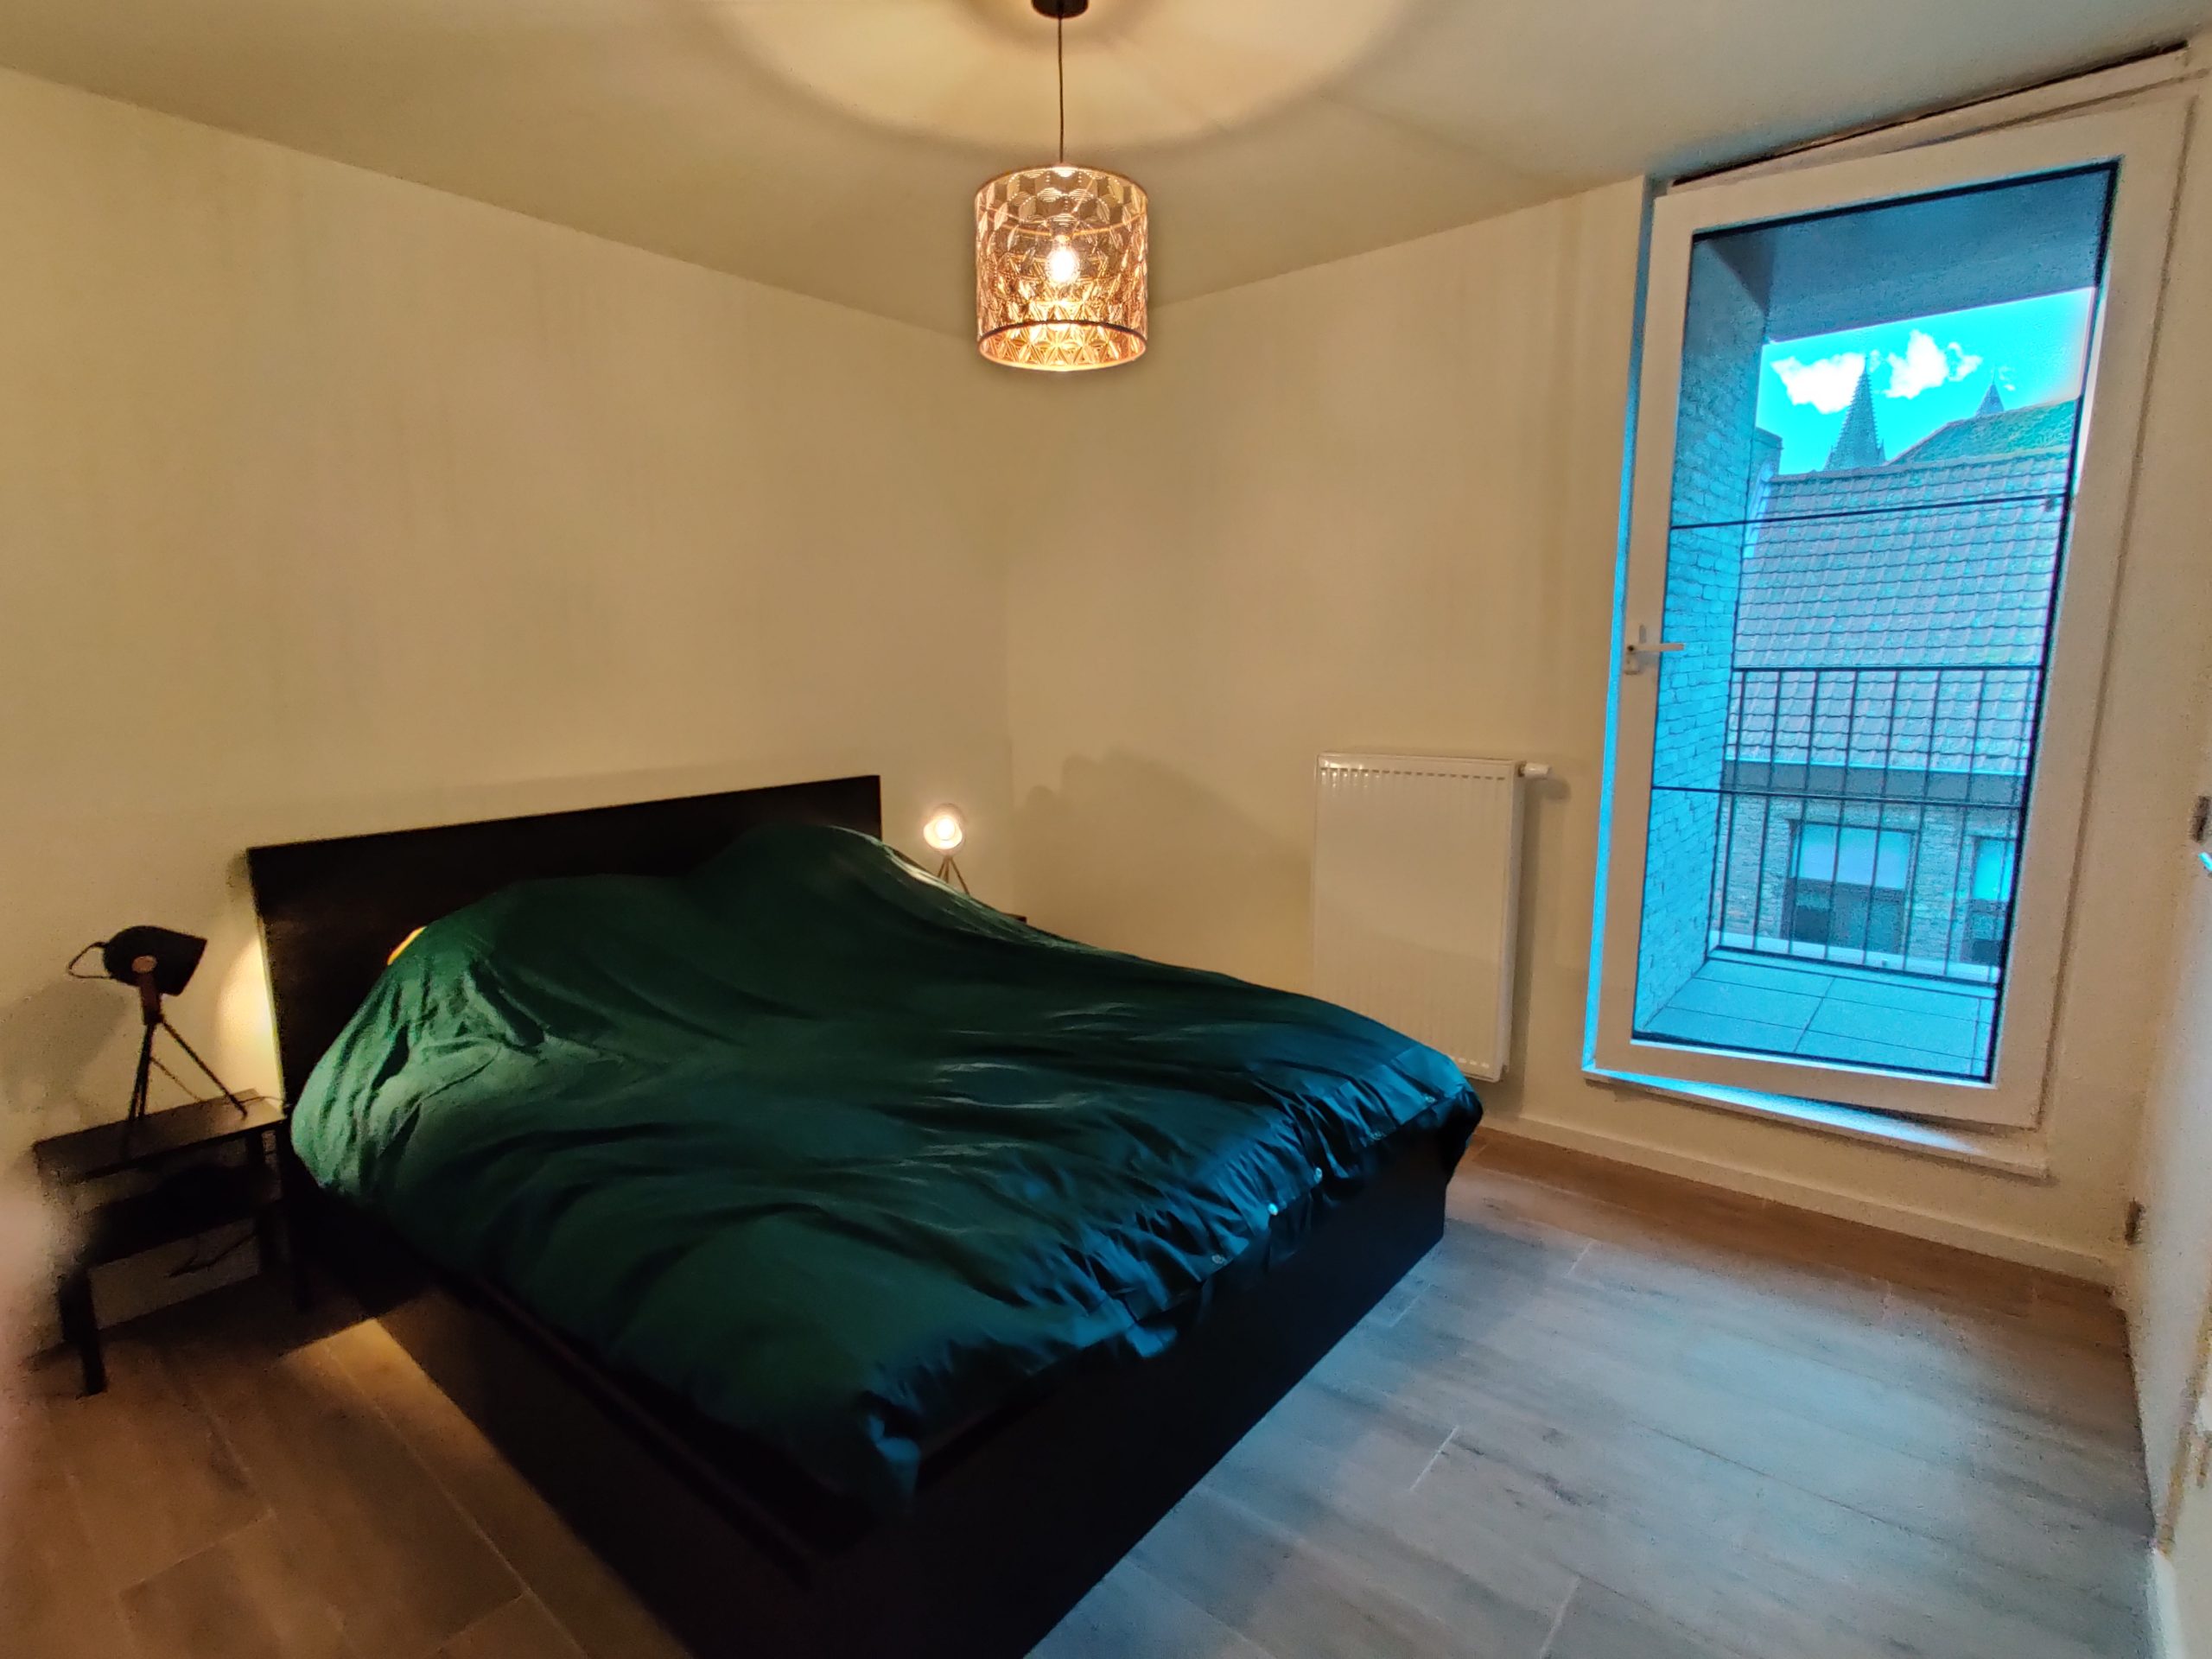 apartment-for-rent-in-gent-bedroom